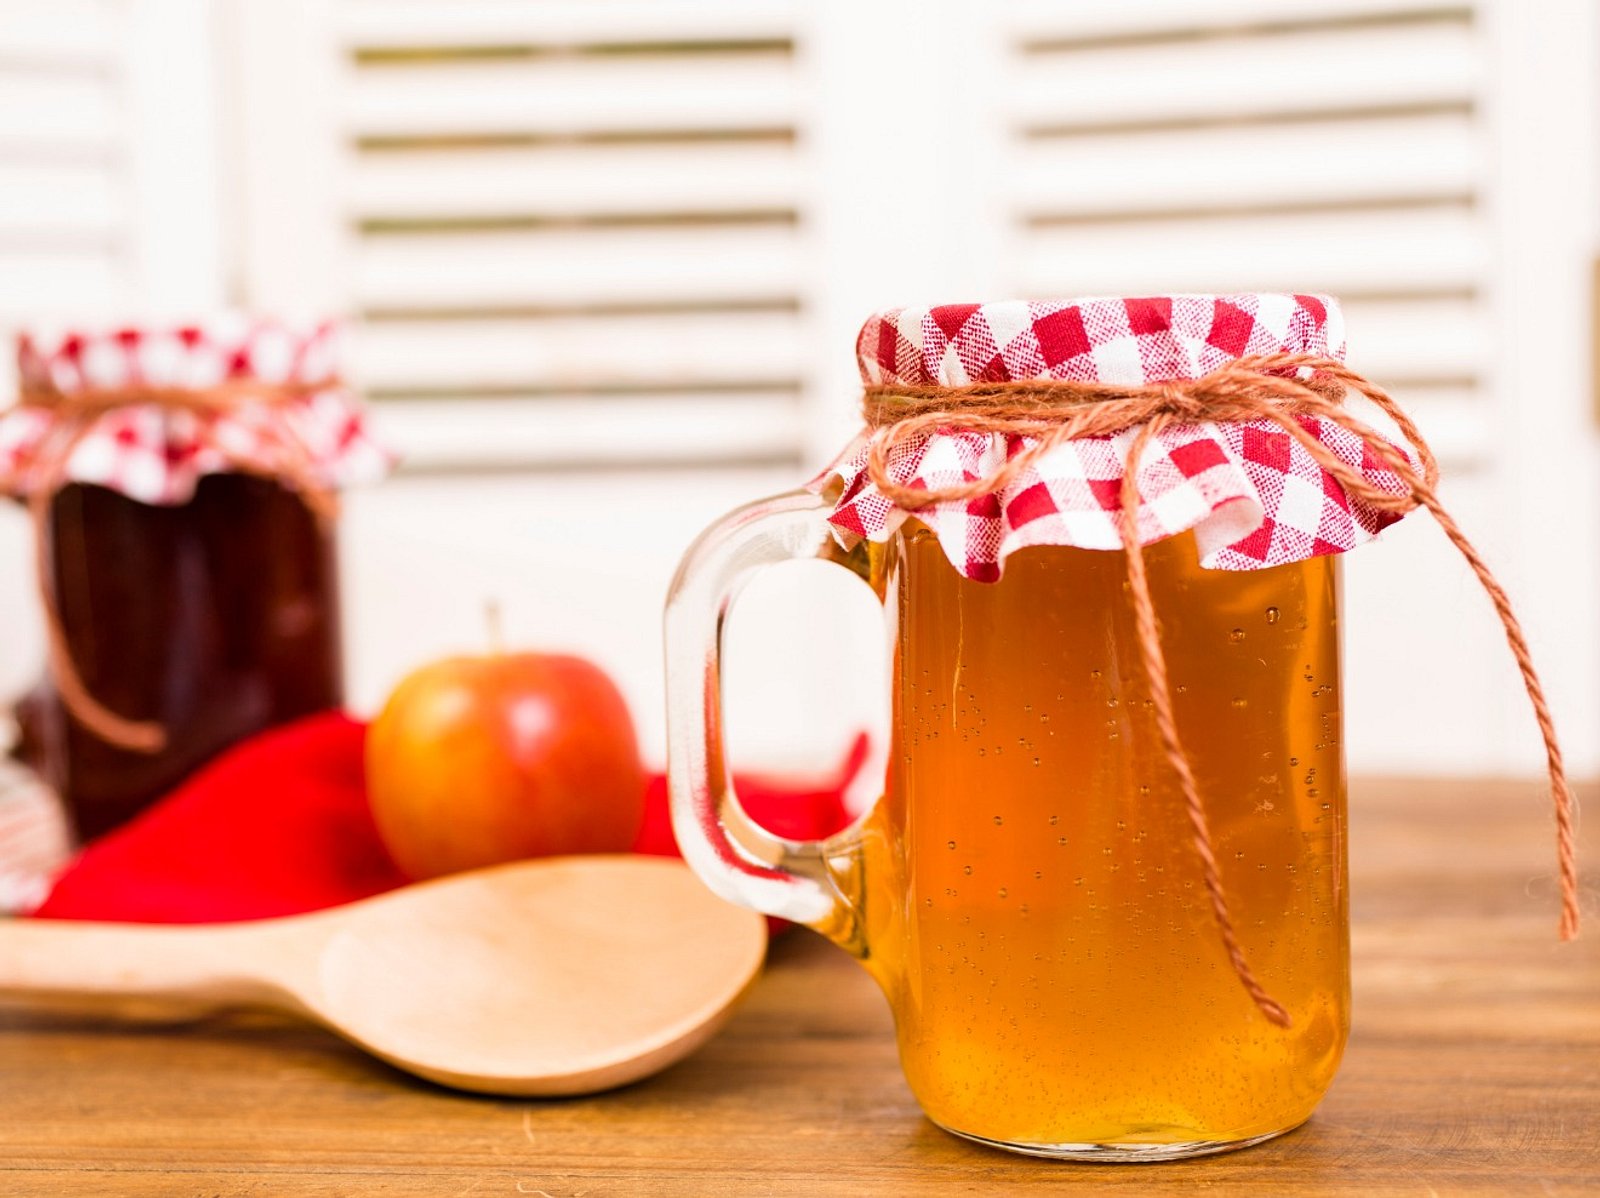 Apfelgelee-Rezept: Zwei Wege zum süßen Glück | Wunderweib